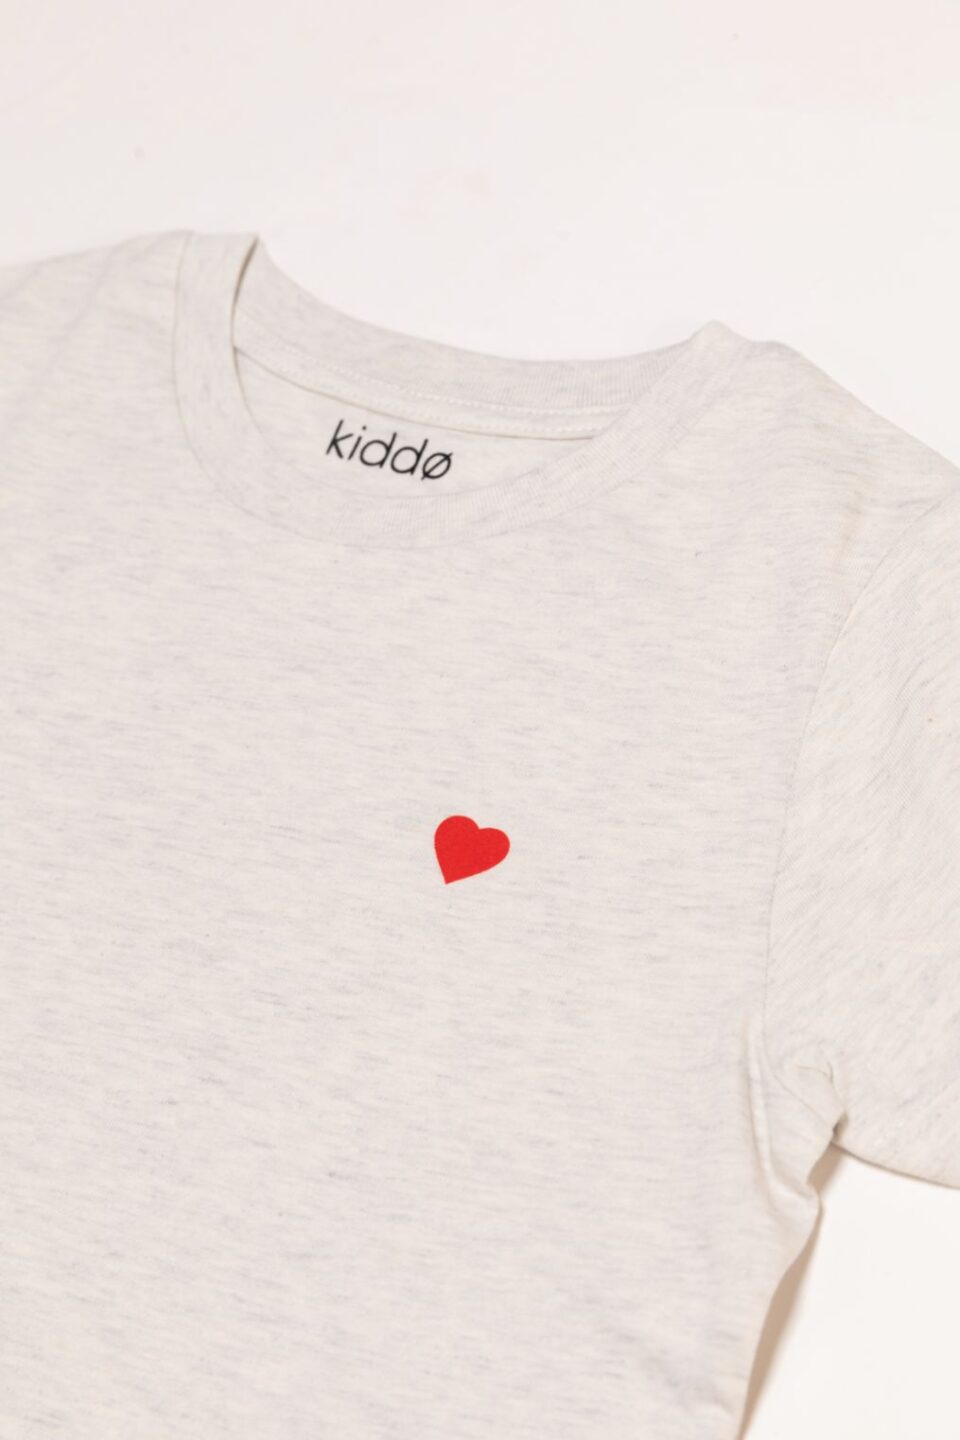 Kiddø_T-Shirt_Cream_Red Heart